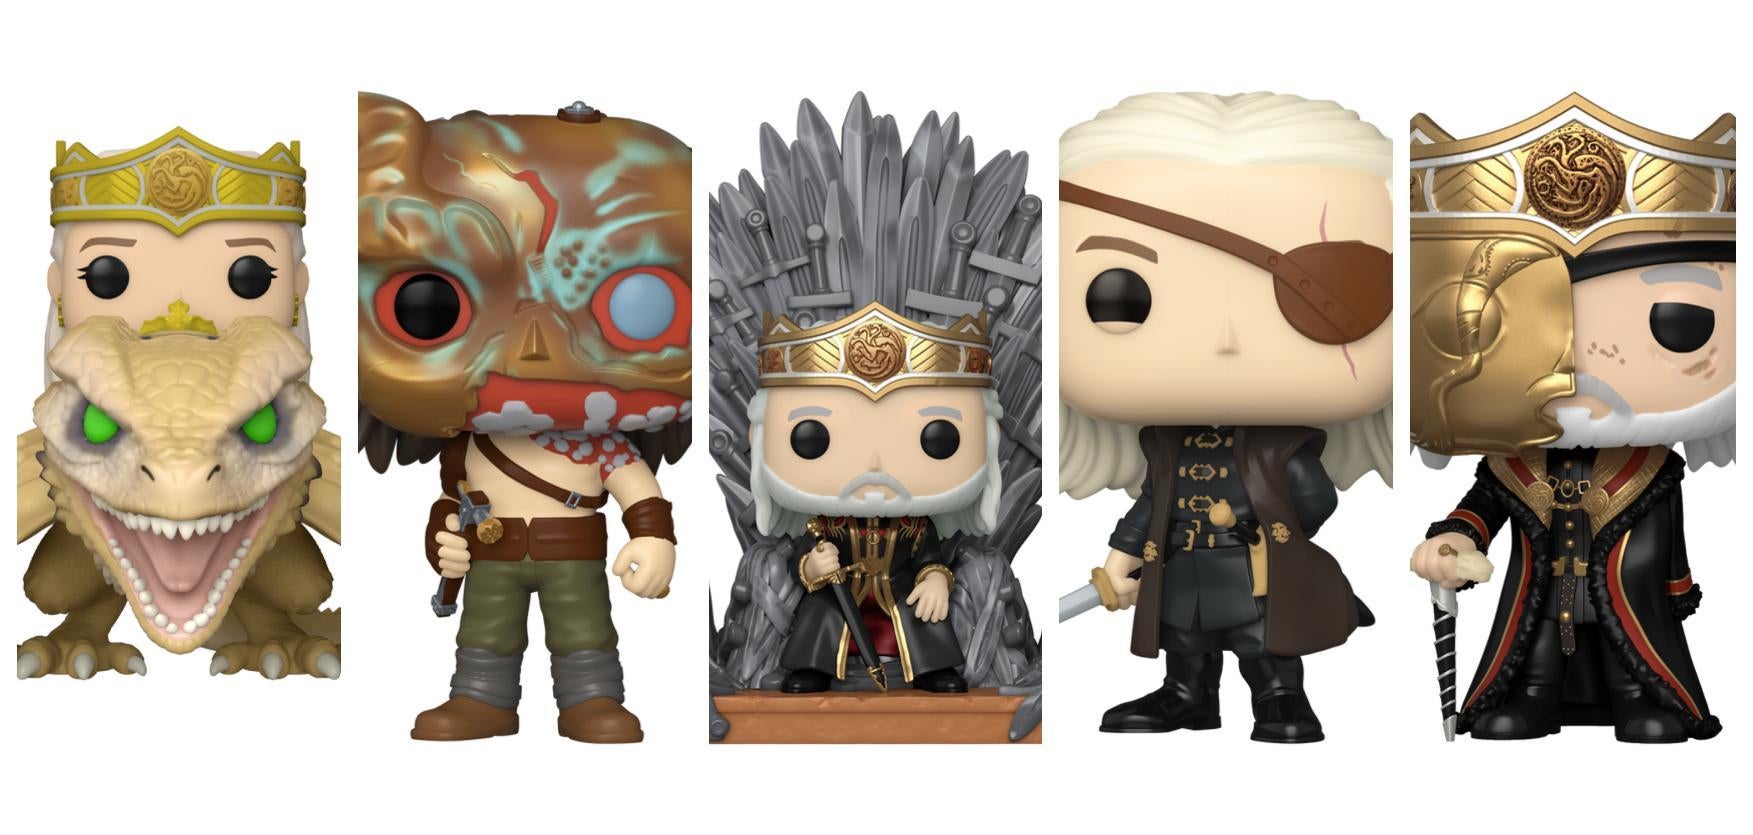 New Game Of Thrones Funko Pop Figures Unveiled - GameSpot